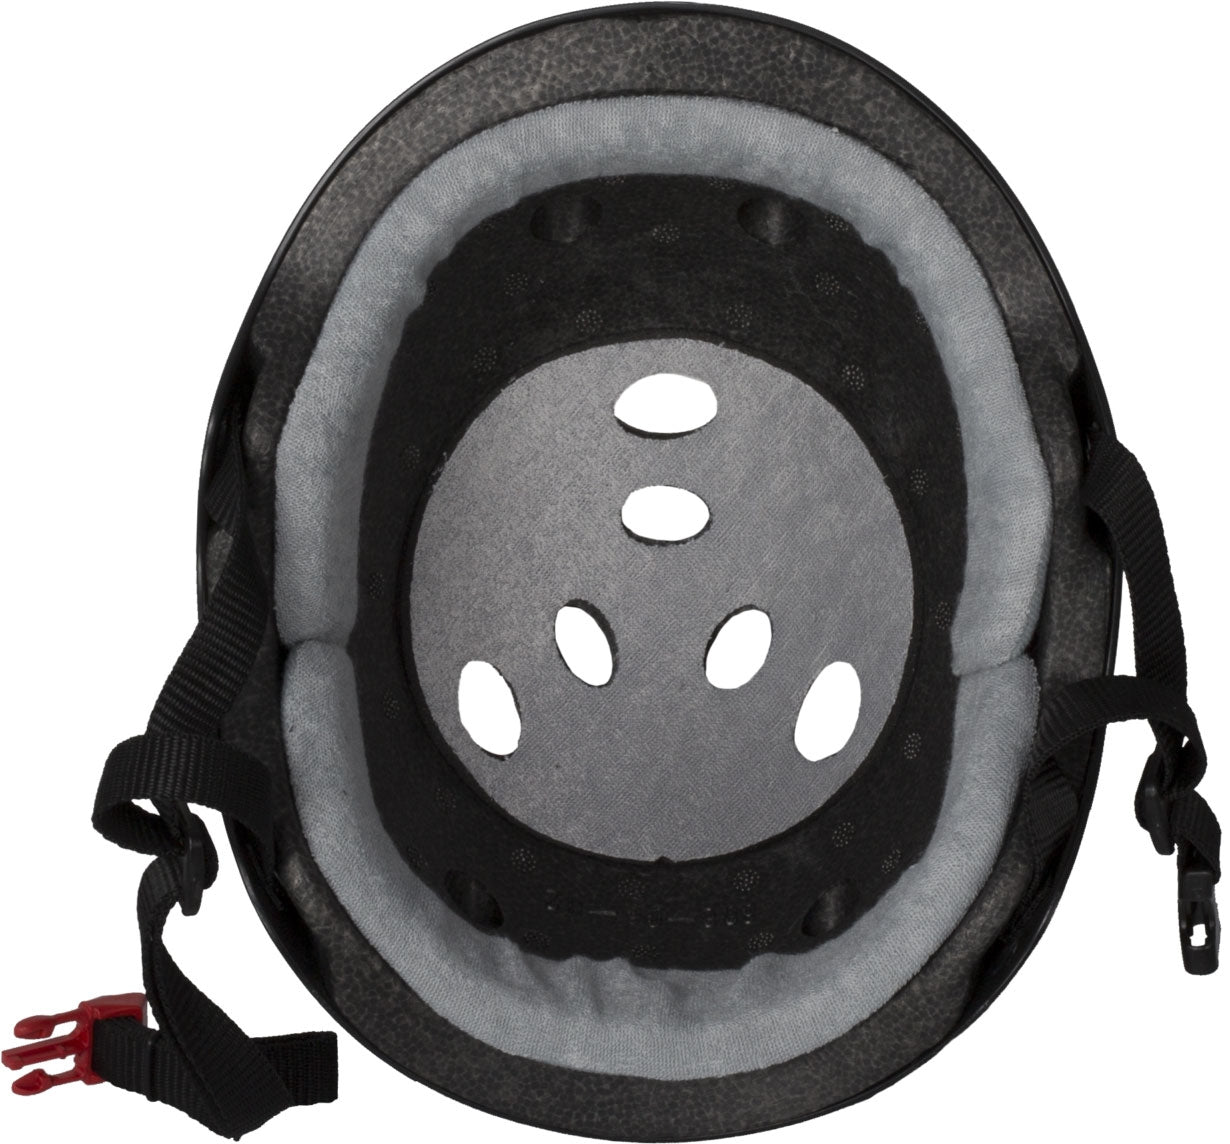 Triple 8 Certified Sweatsaver Helmet - Black - Inner